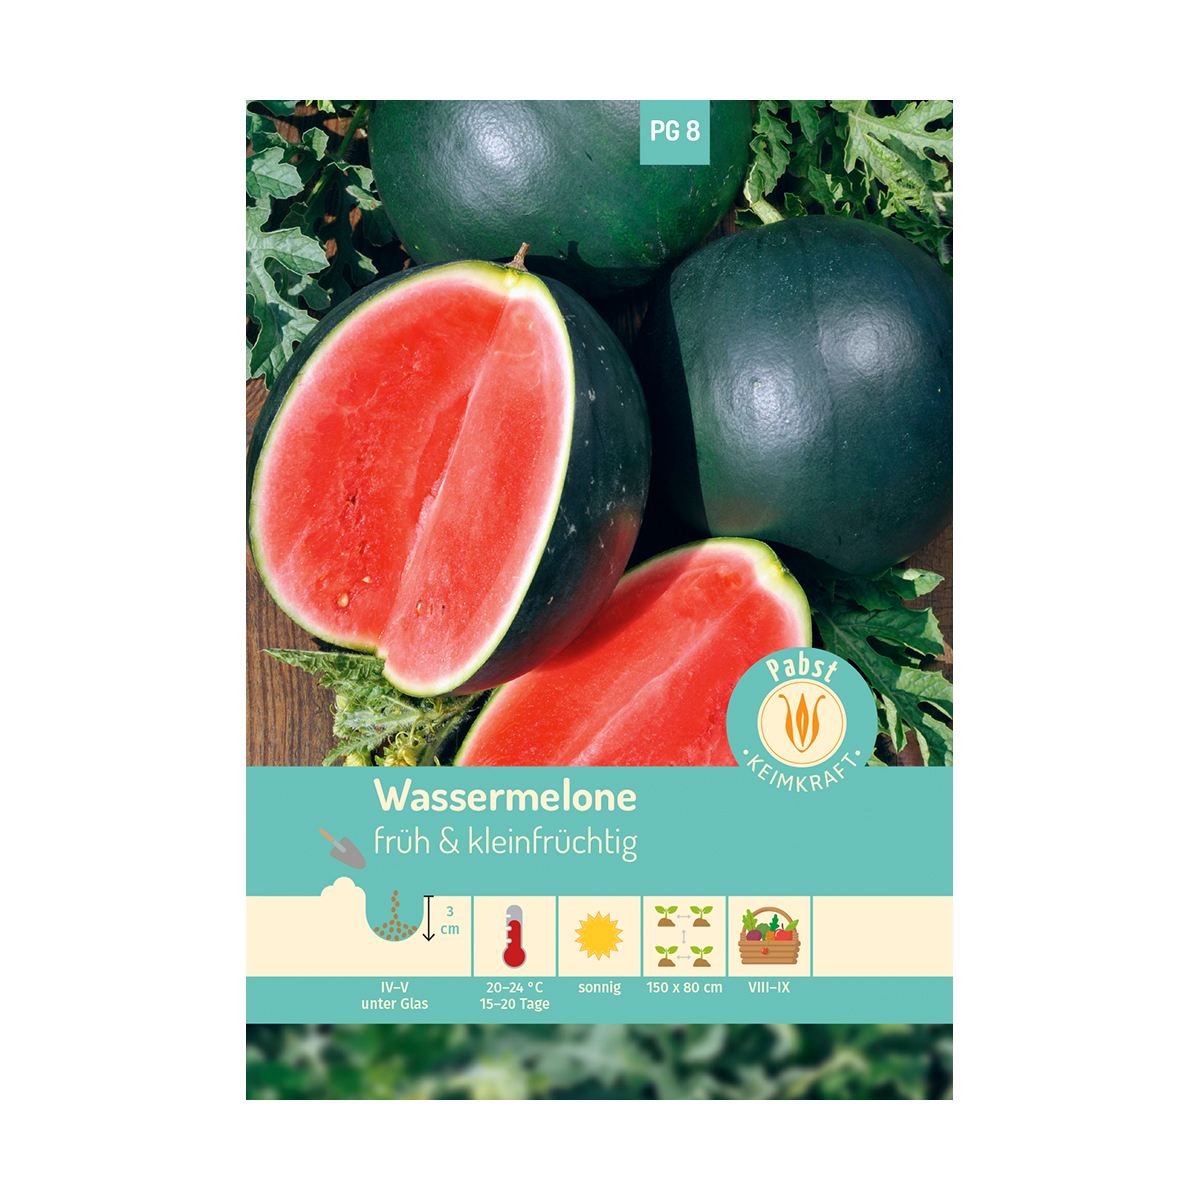 15x Mini Melonen Rot Sugar Baby Samen Obst Pflanze Rarität lecker #135 